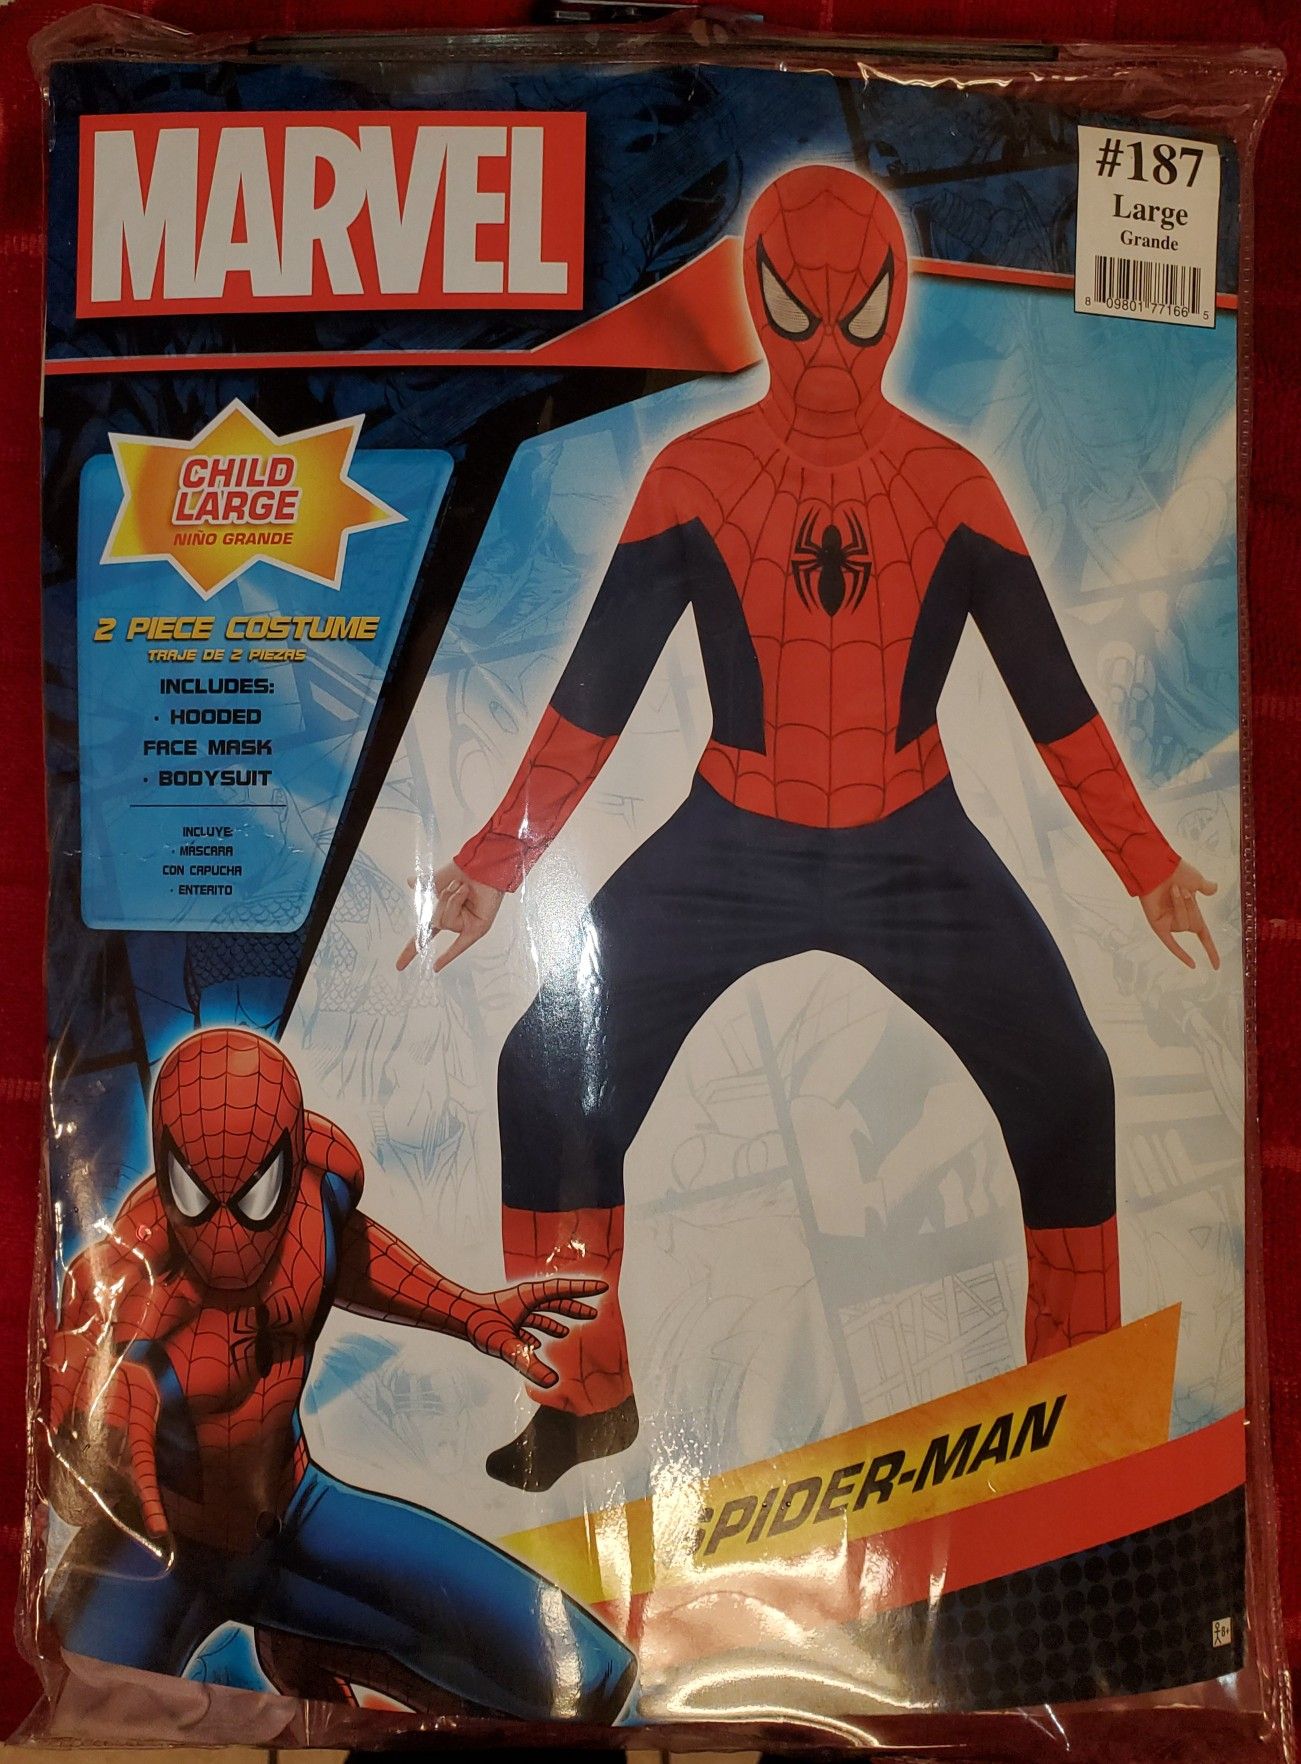 Large Spider-Man Costume for kids